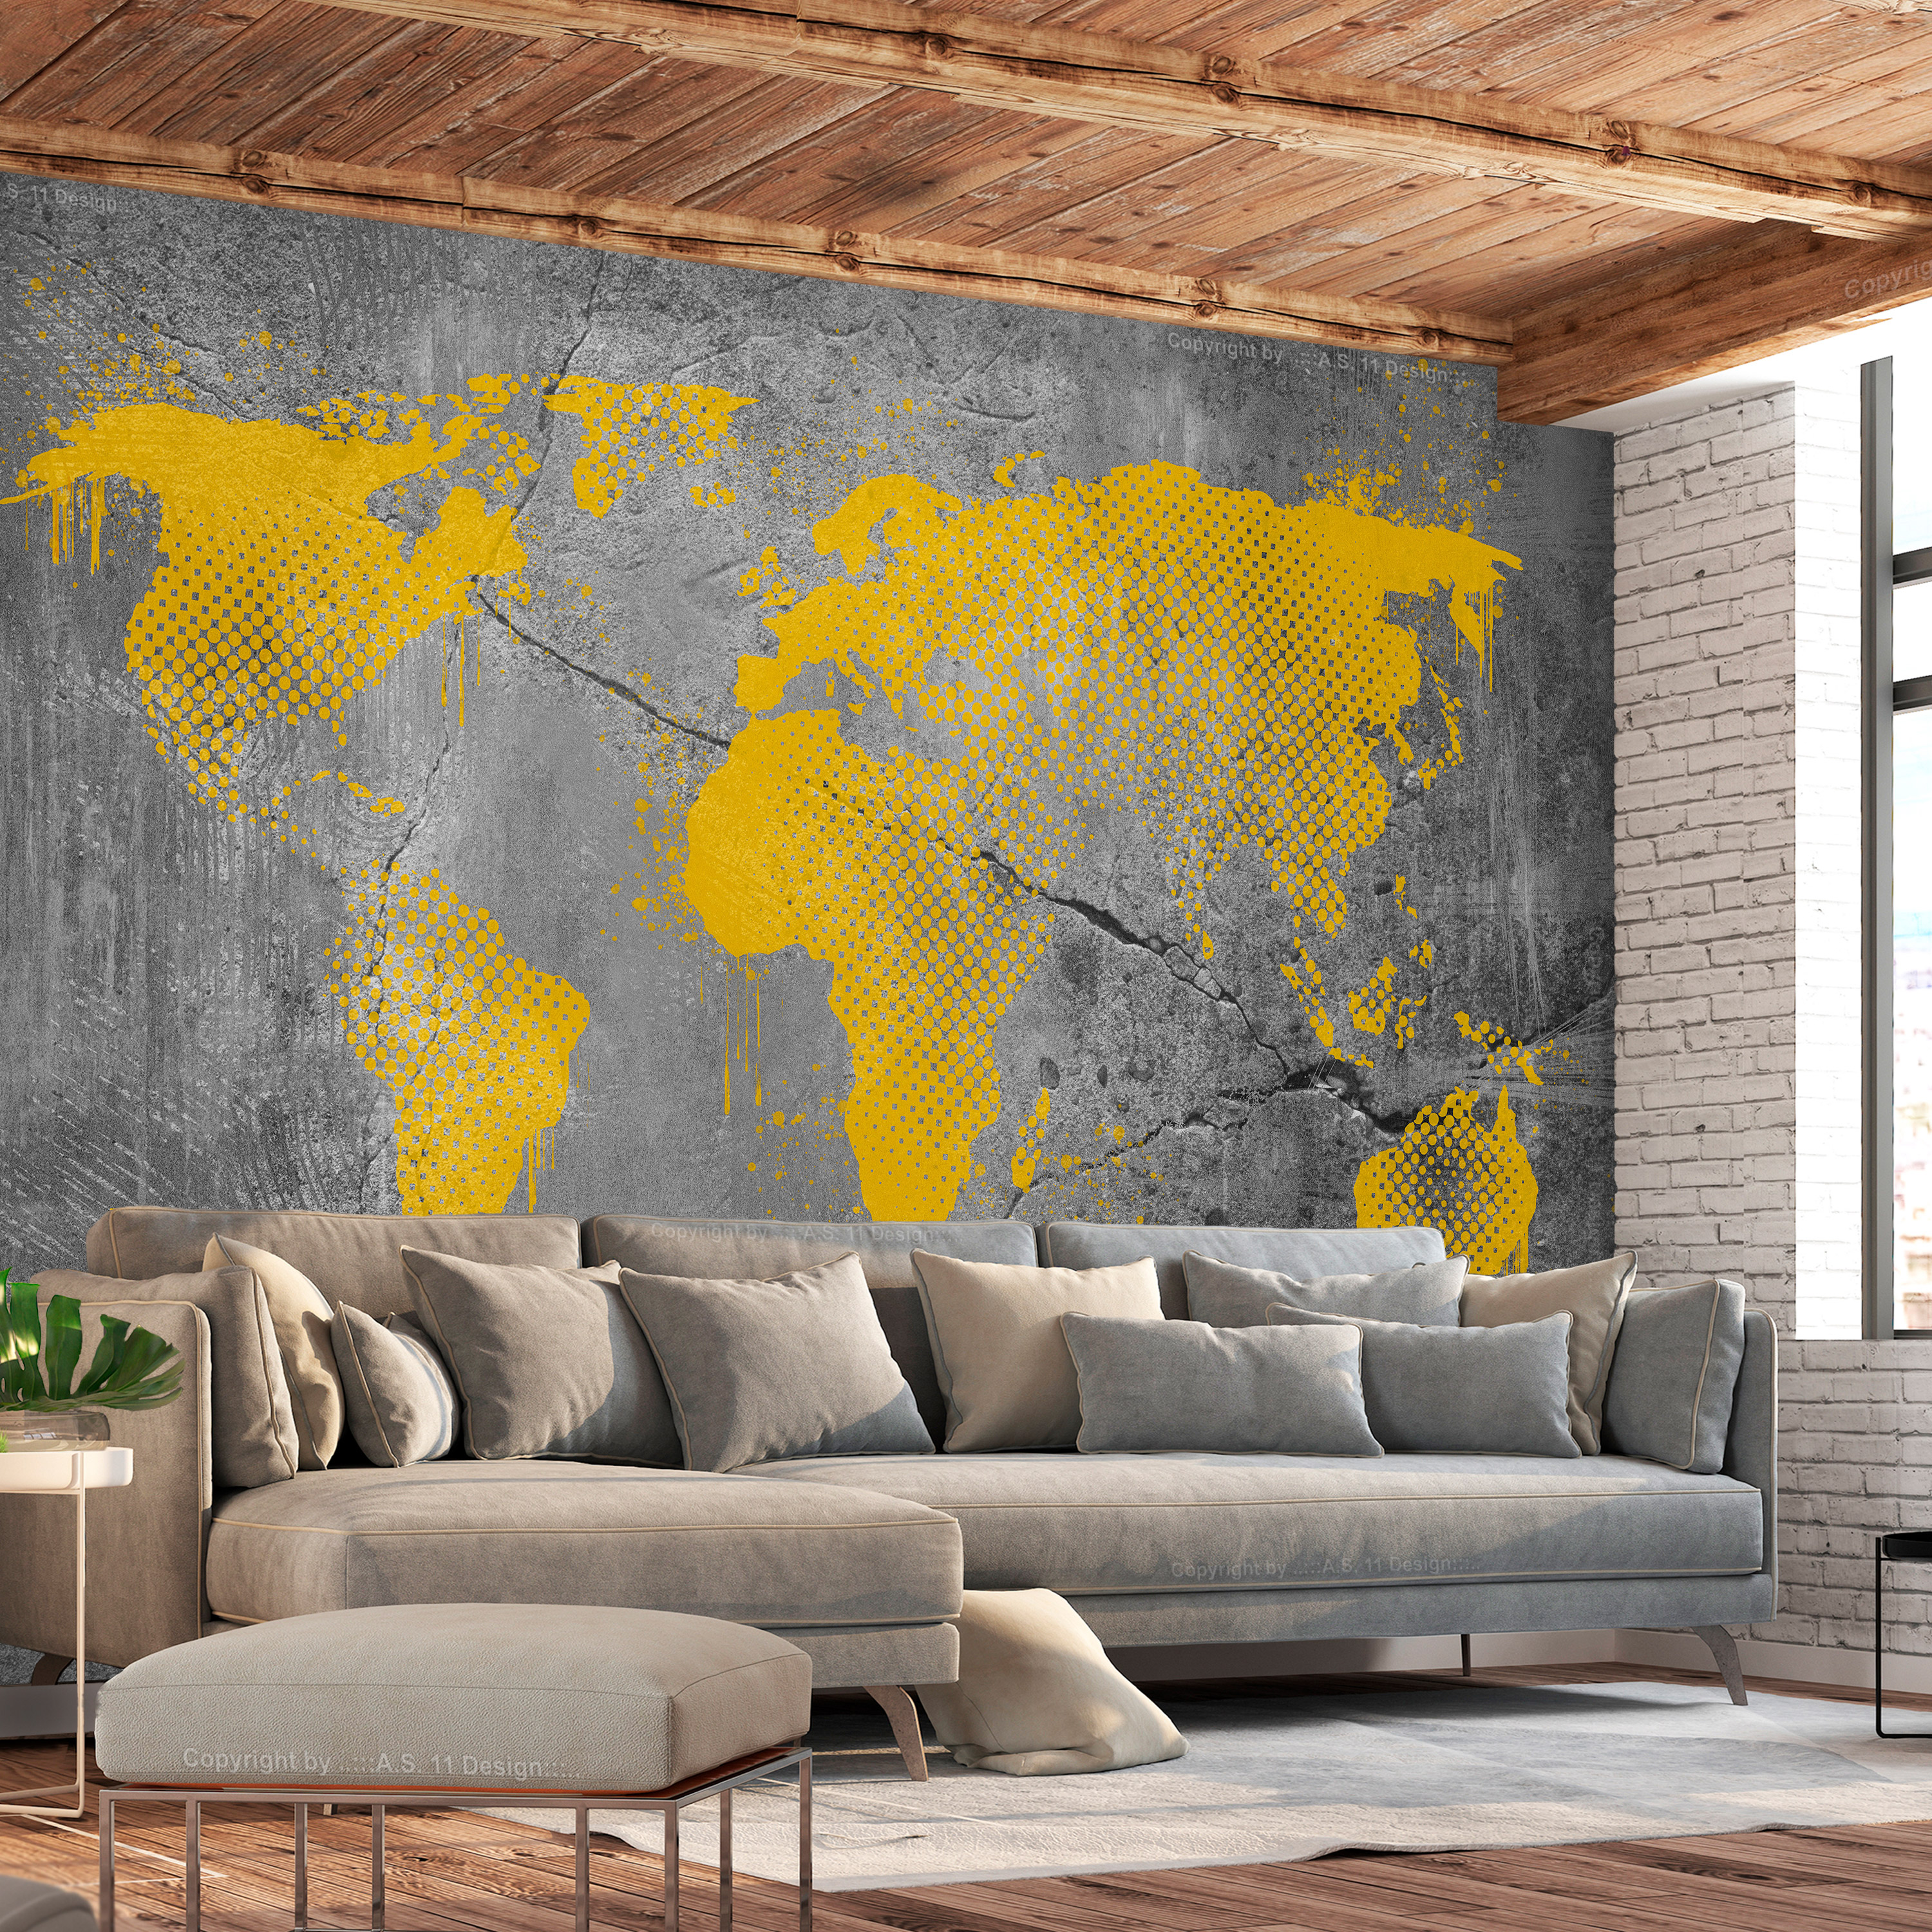 Self-adhesive Wallpaper - Painted World - 98x70